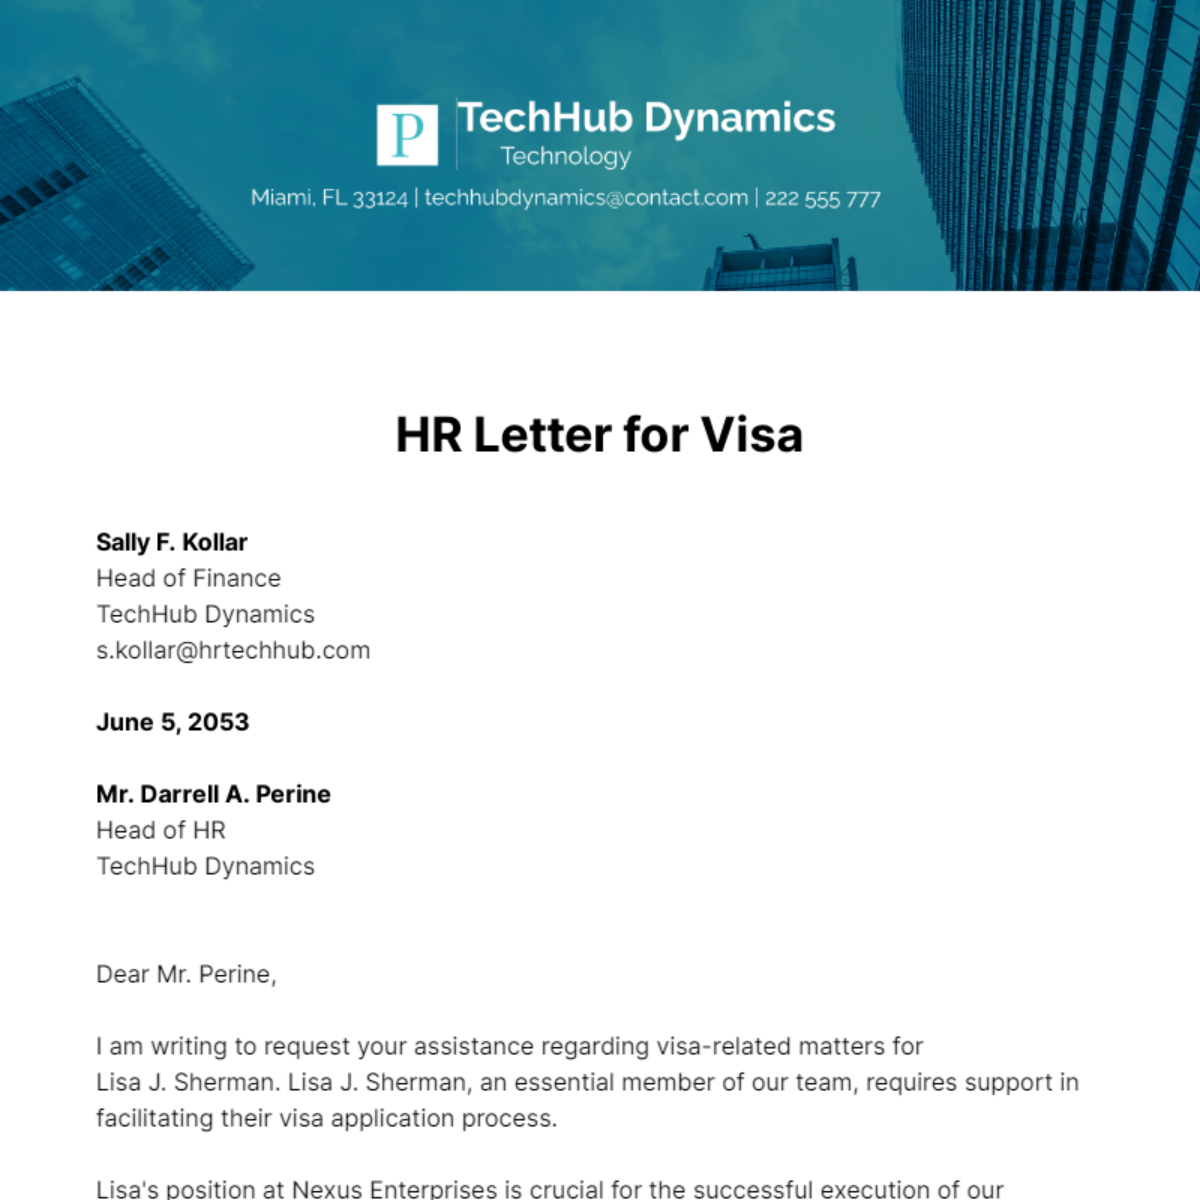 HR Letter for Visa Template